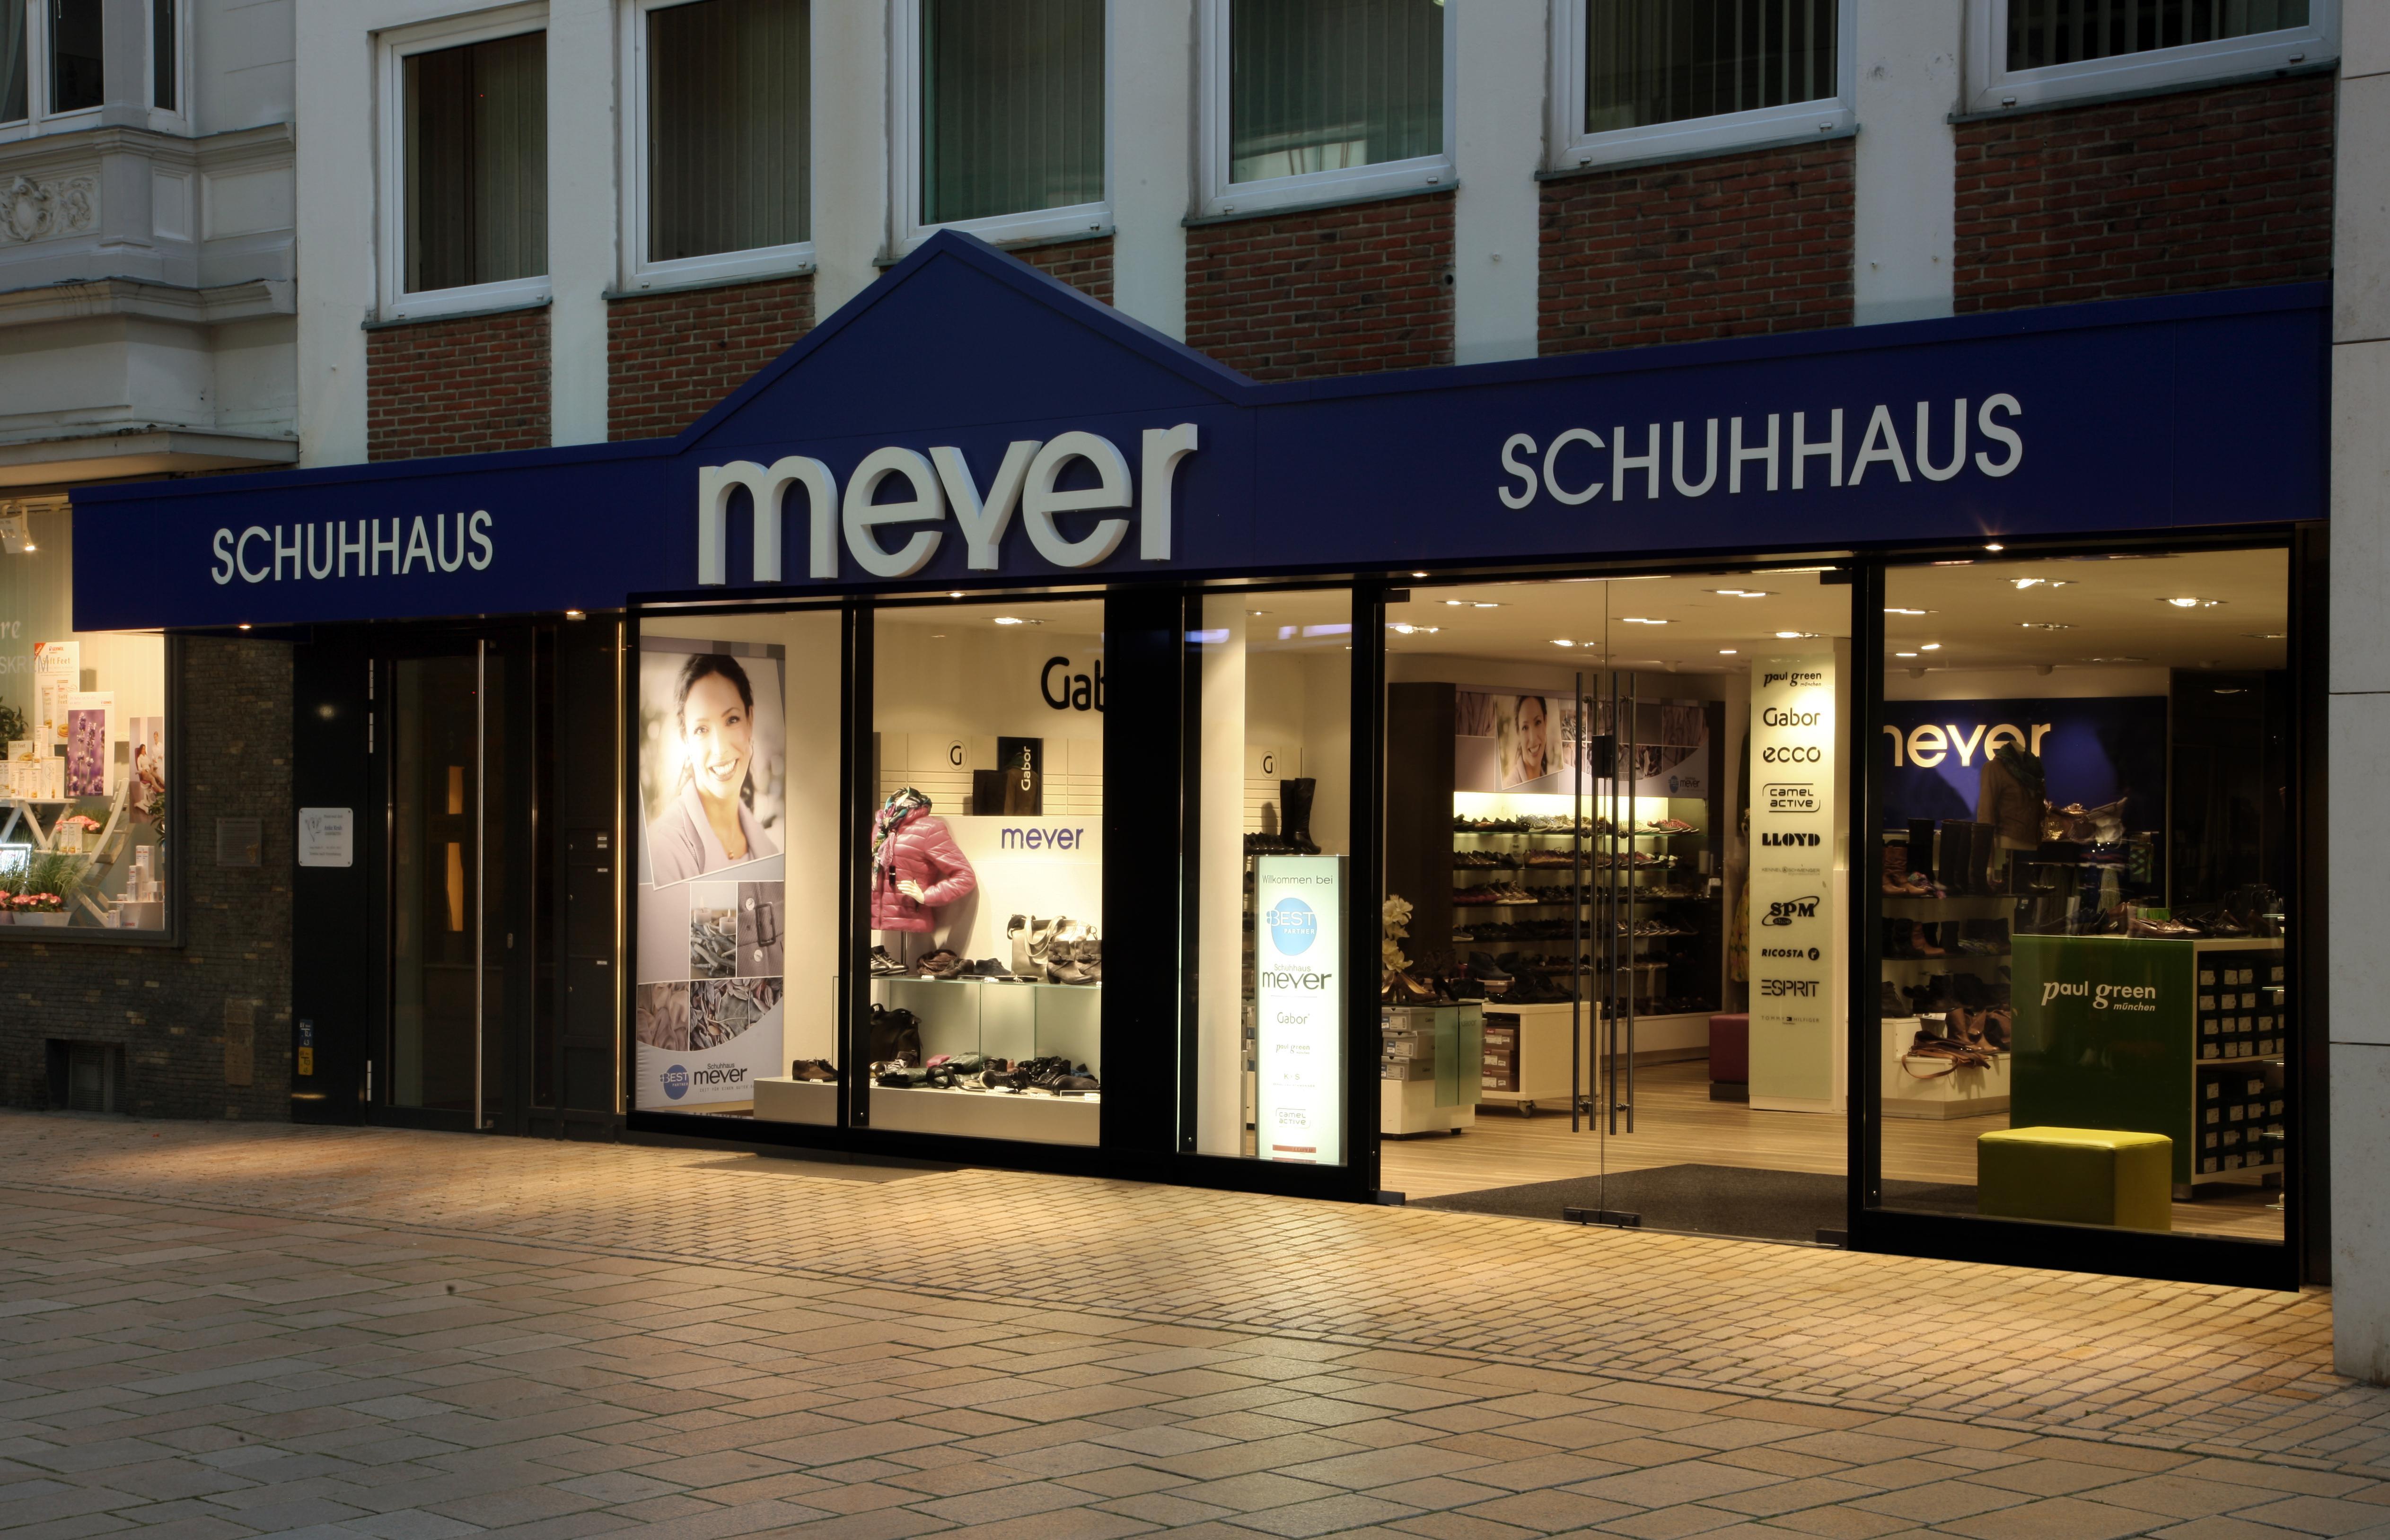 Schuhhaus Meyer GmbH & Co. KG